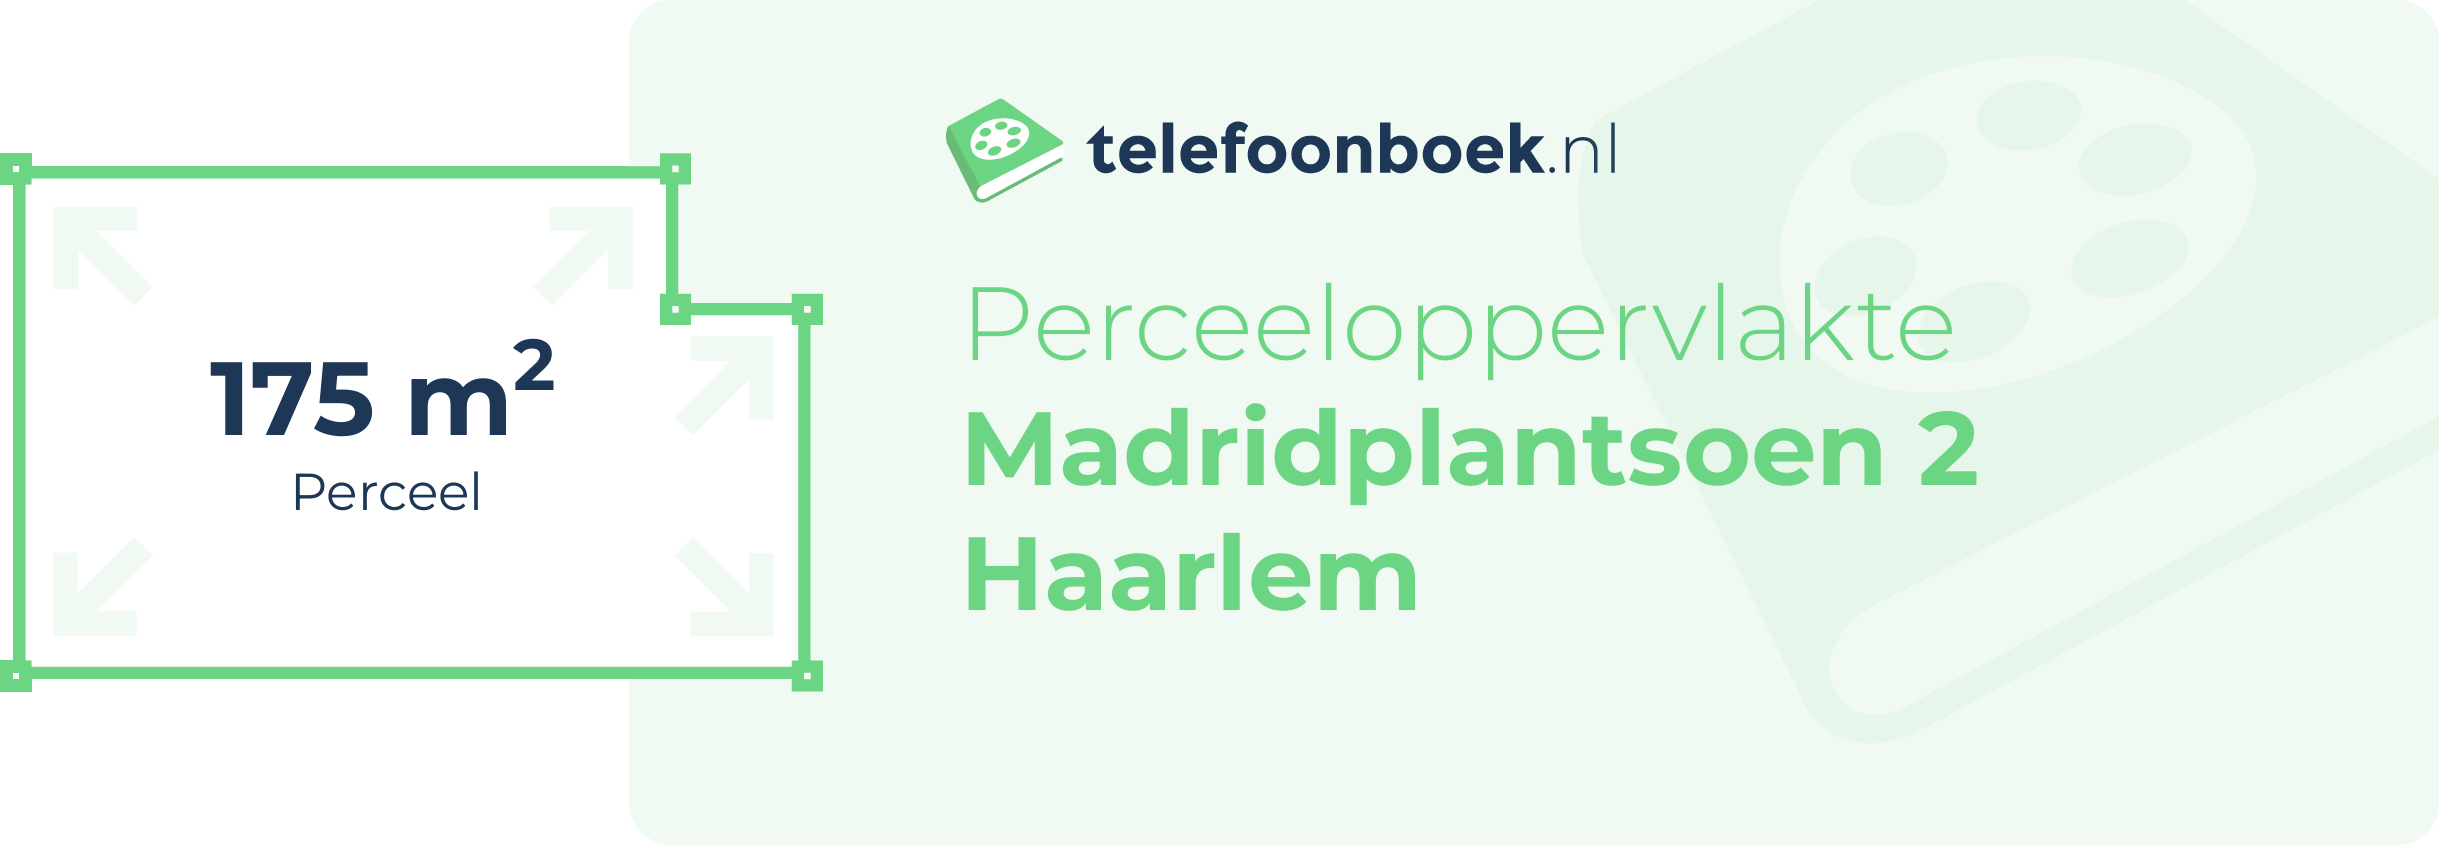 Perceeloppervlakte Madridplantsoen 2 Haarlem